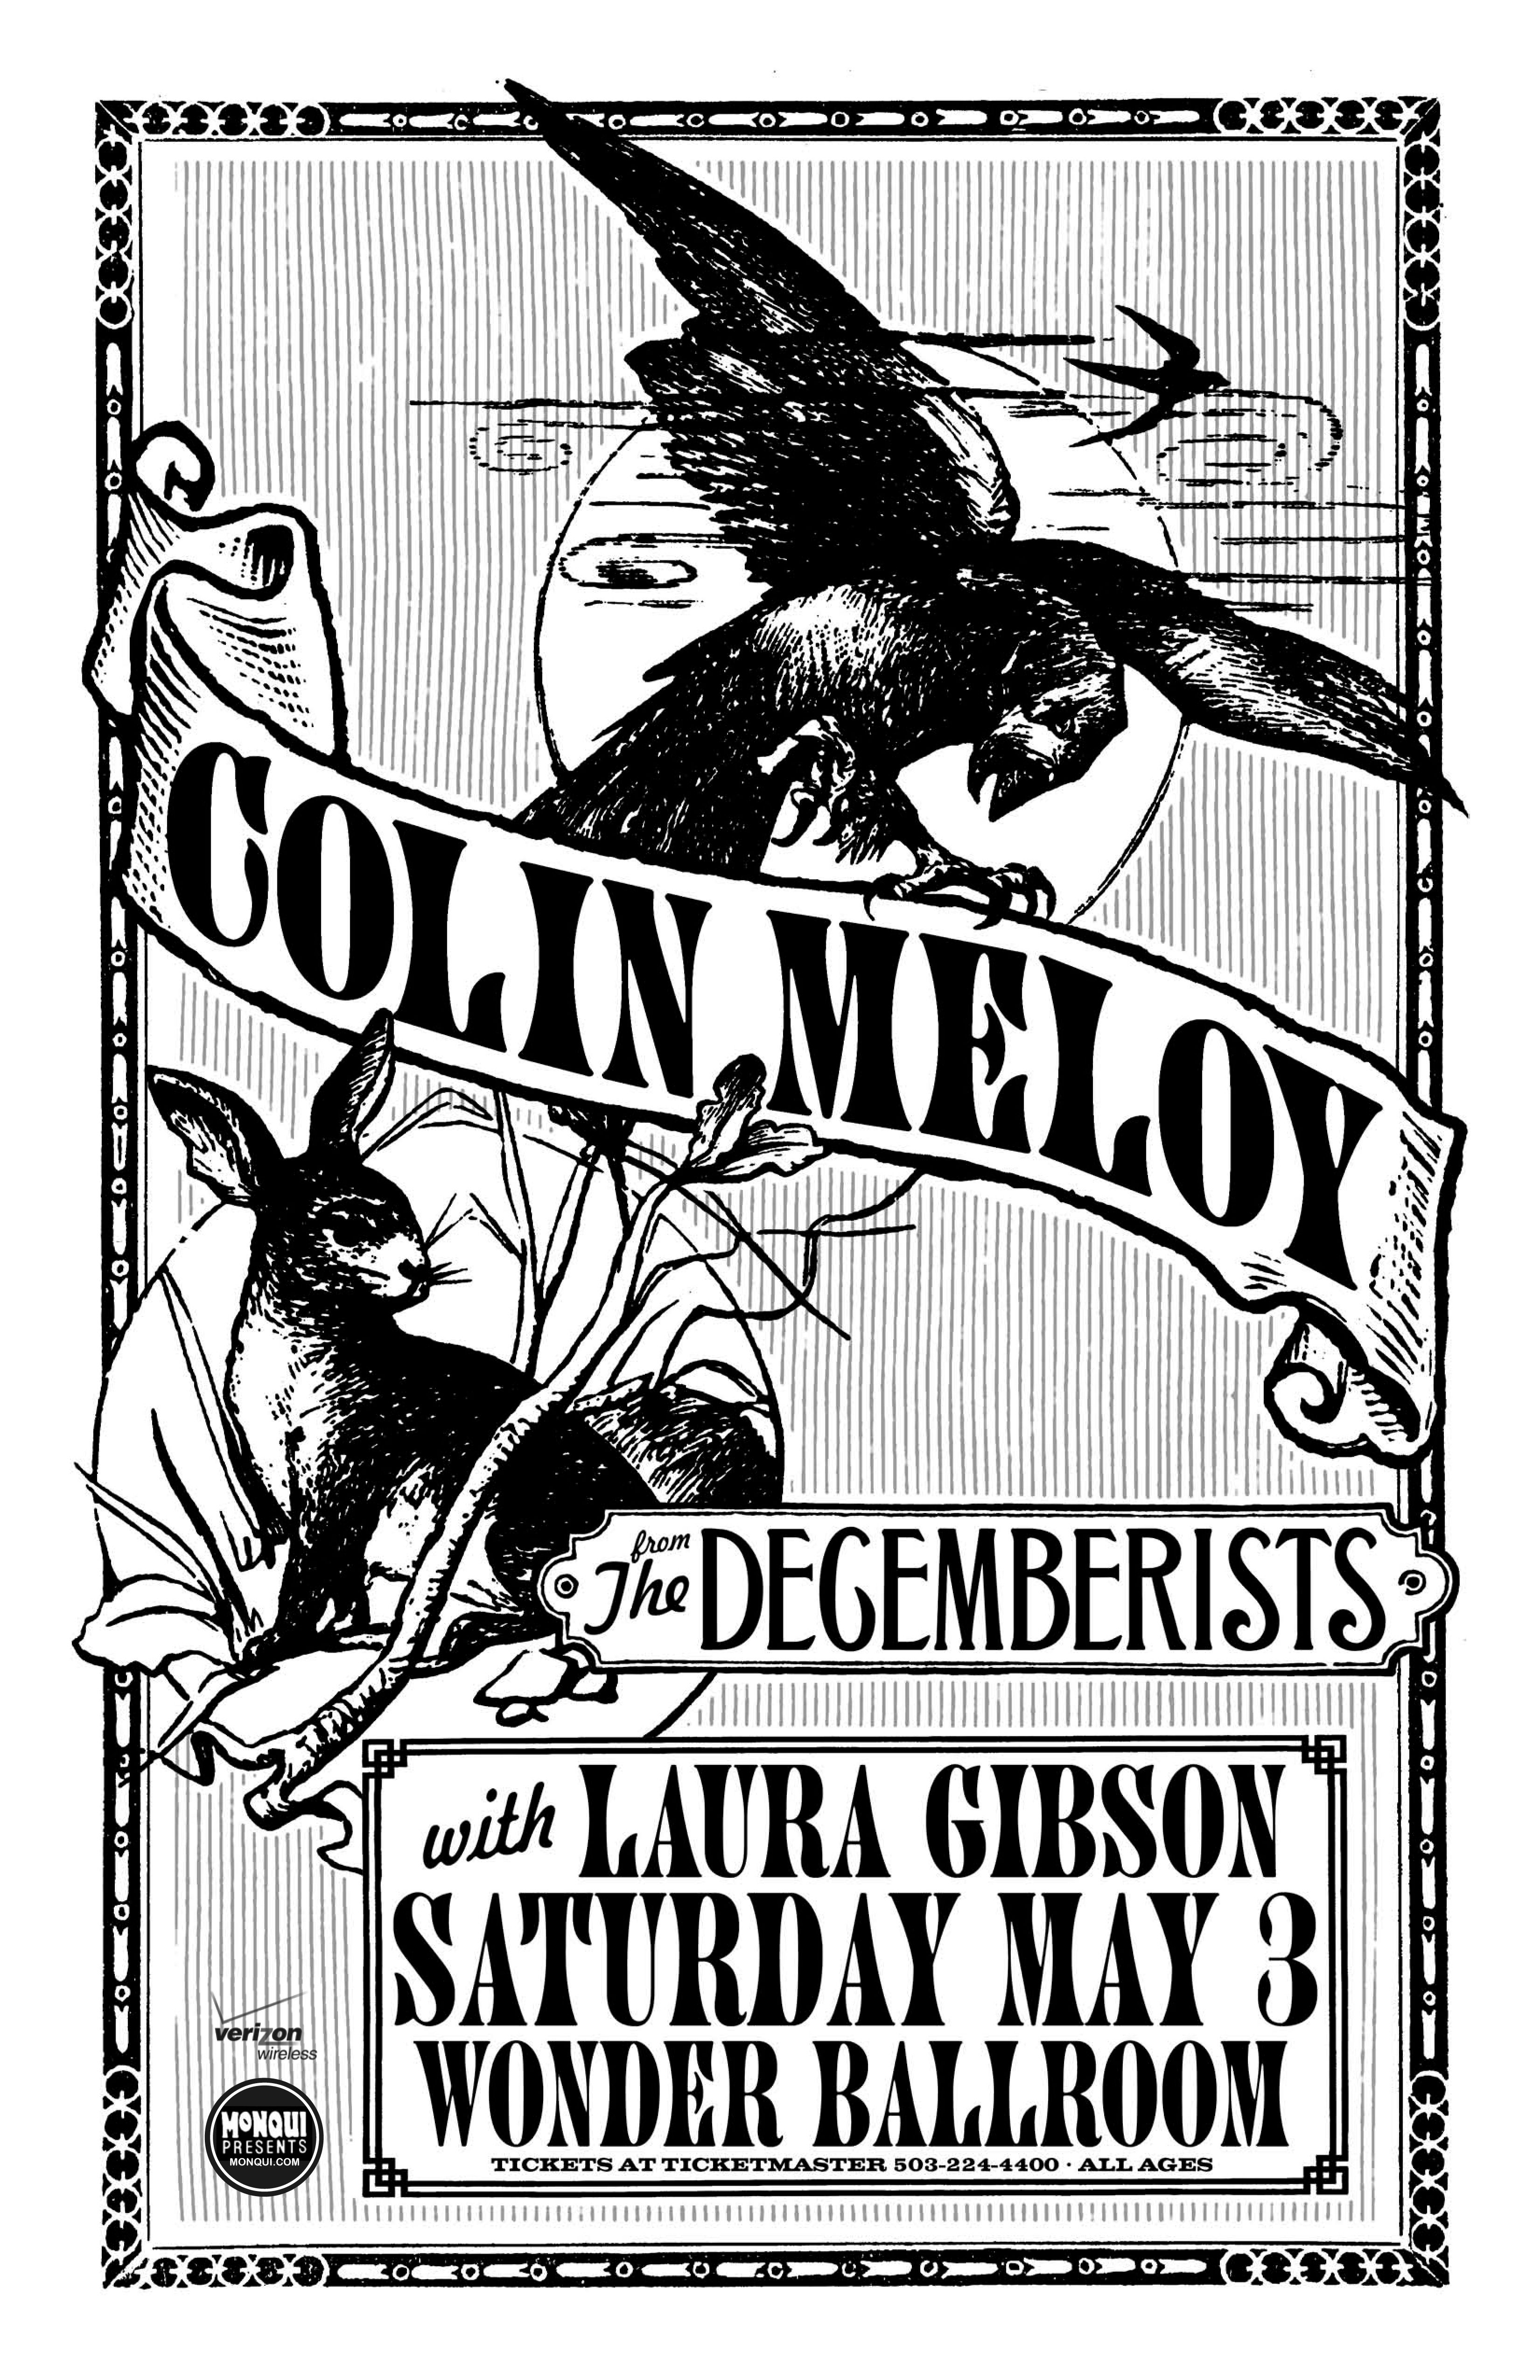 MXP-141.23 Colin Meloy 2008 Wonder Ballroom  May 3 Concert Poster